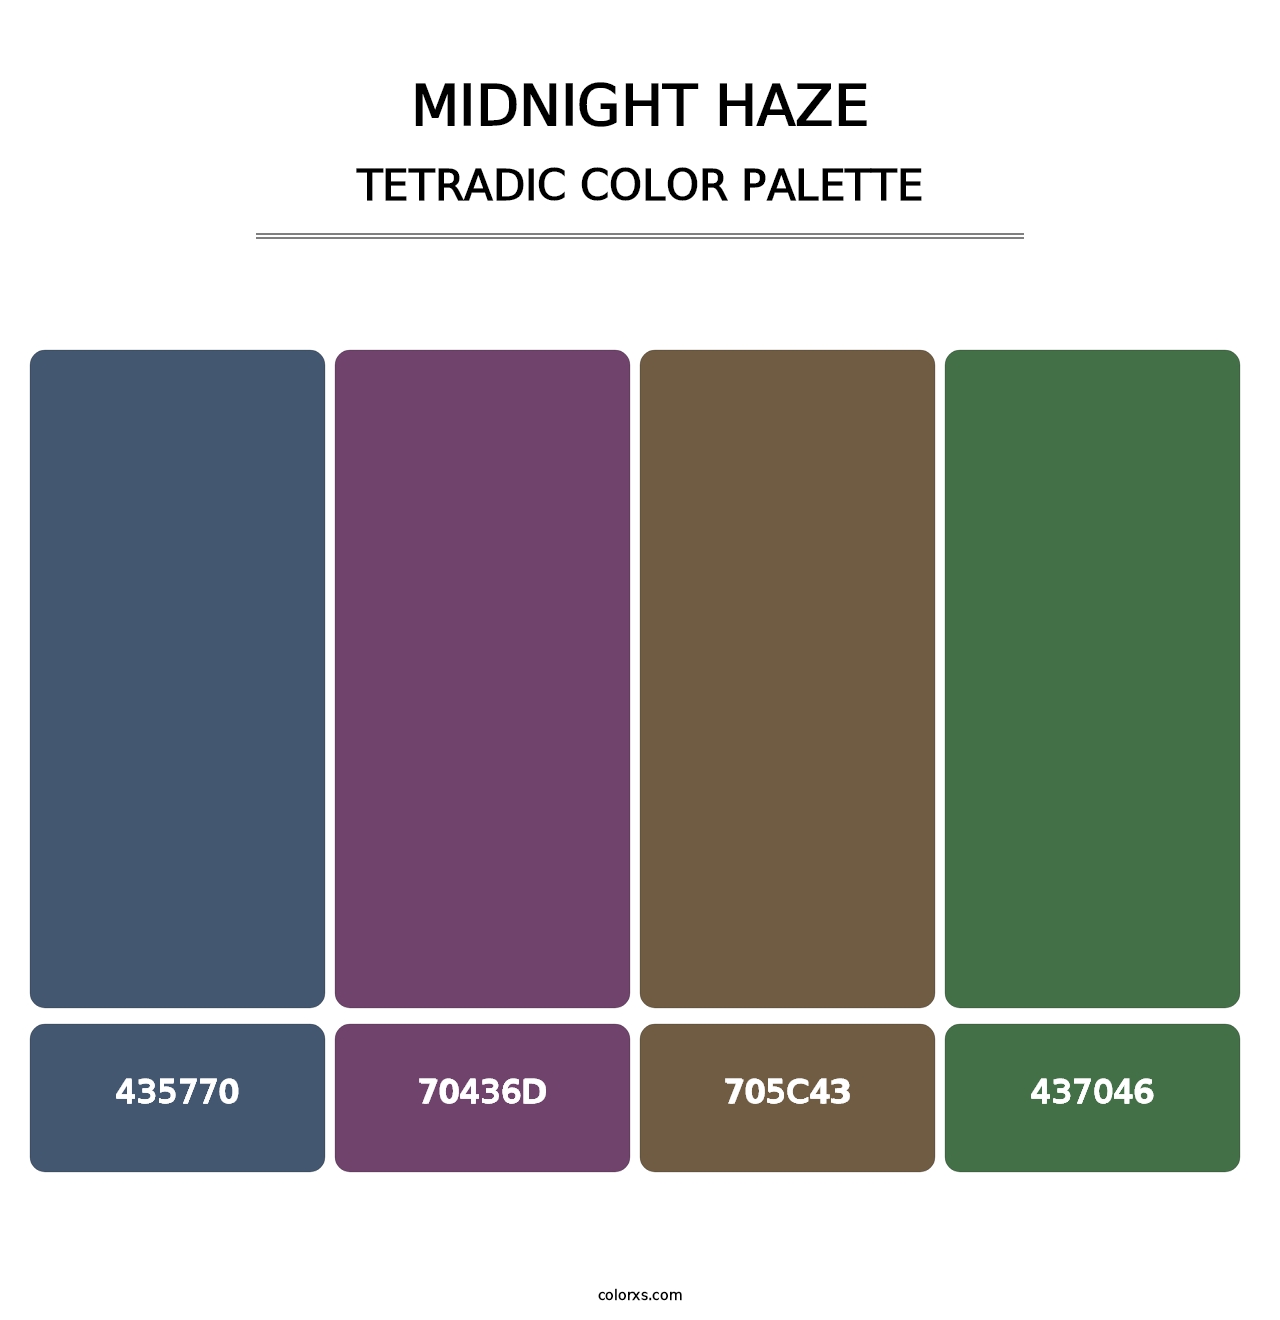 Midnight Haze - Tetradic Color Palette